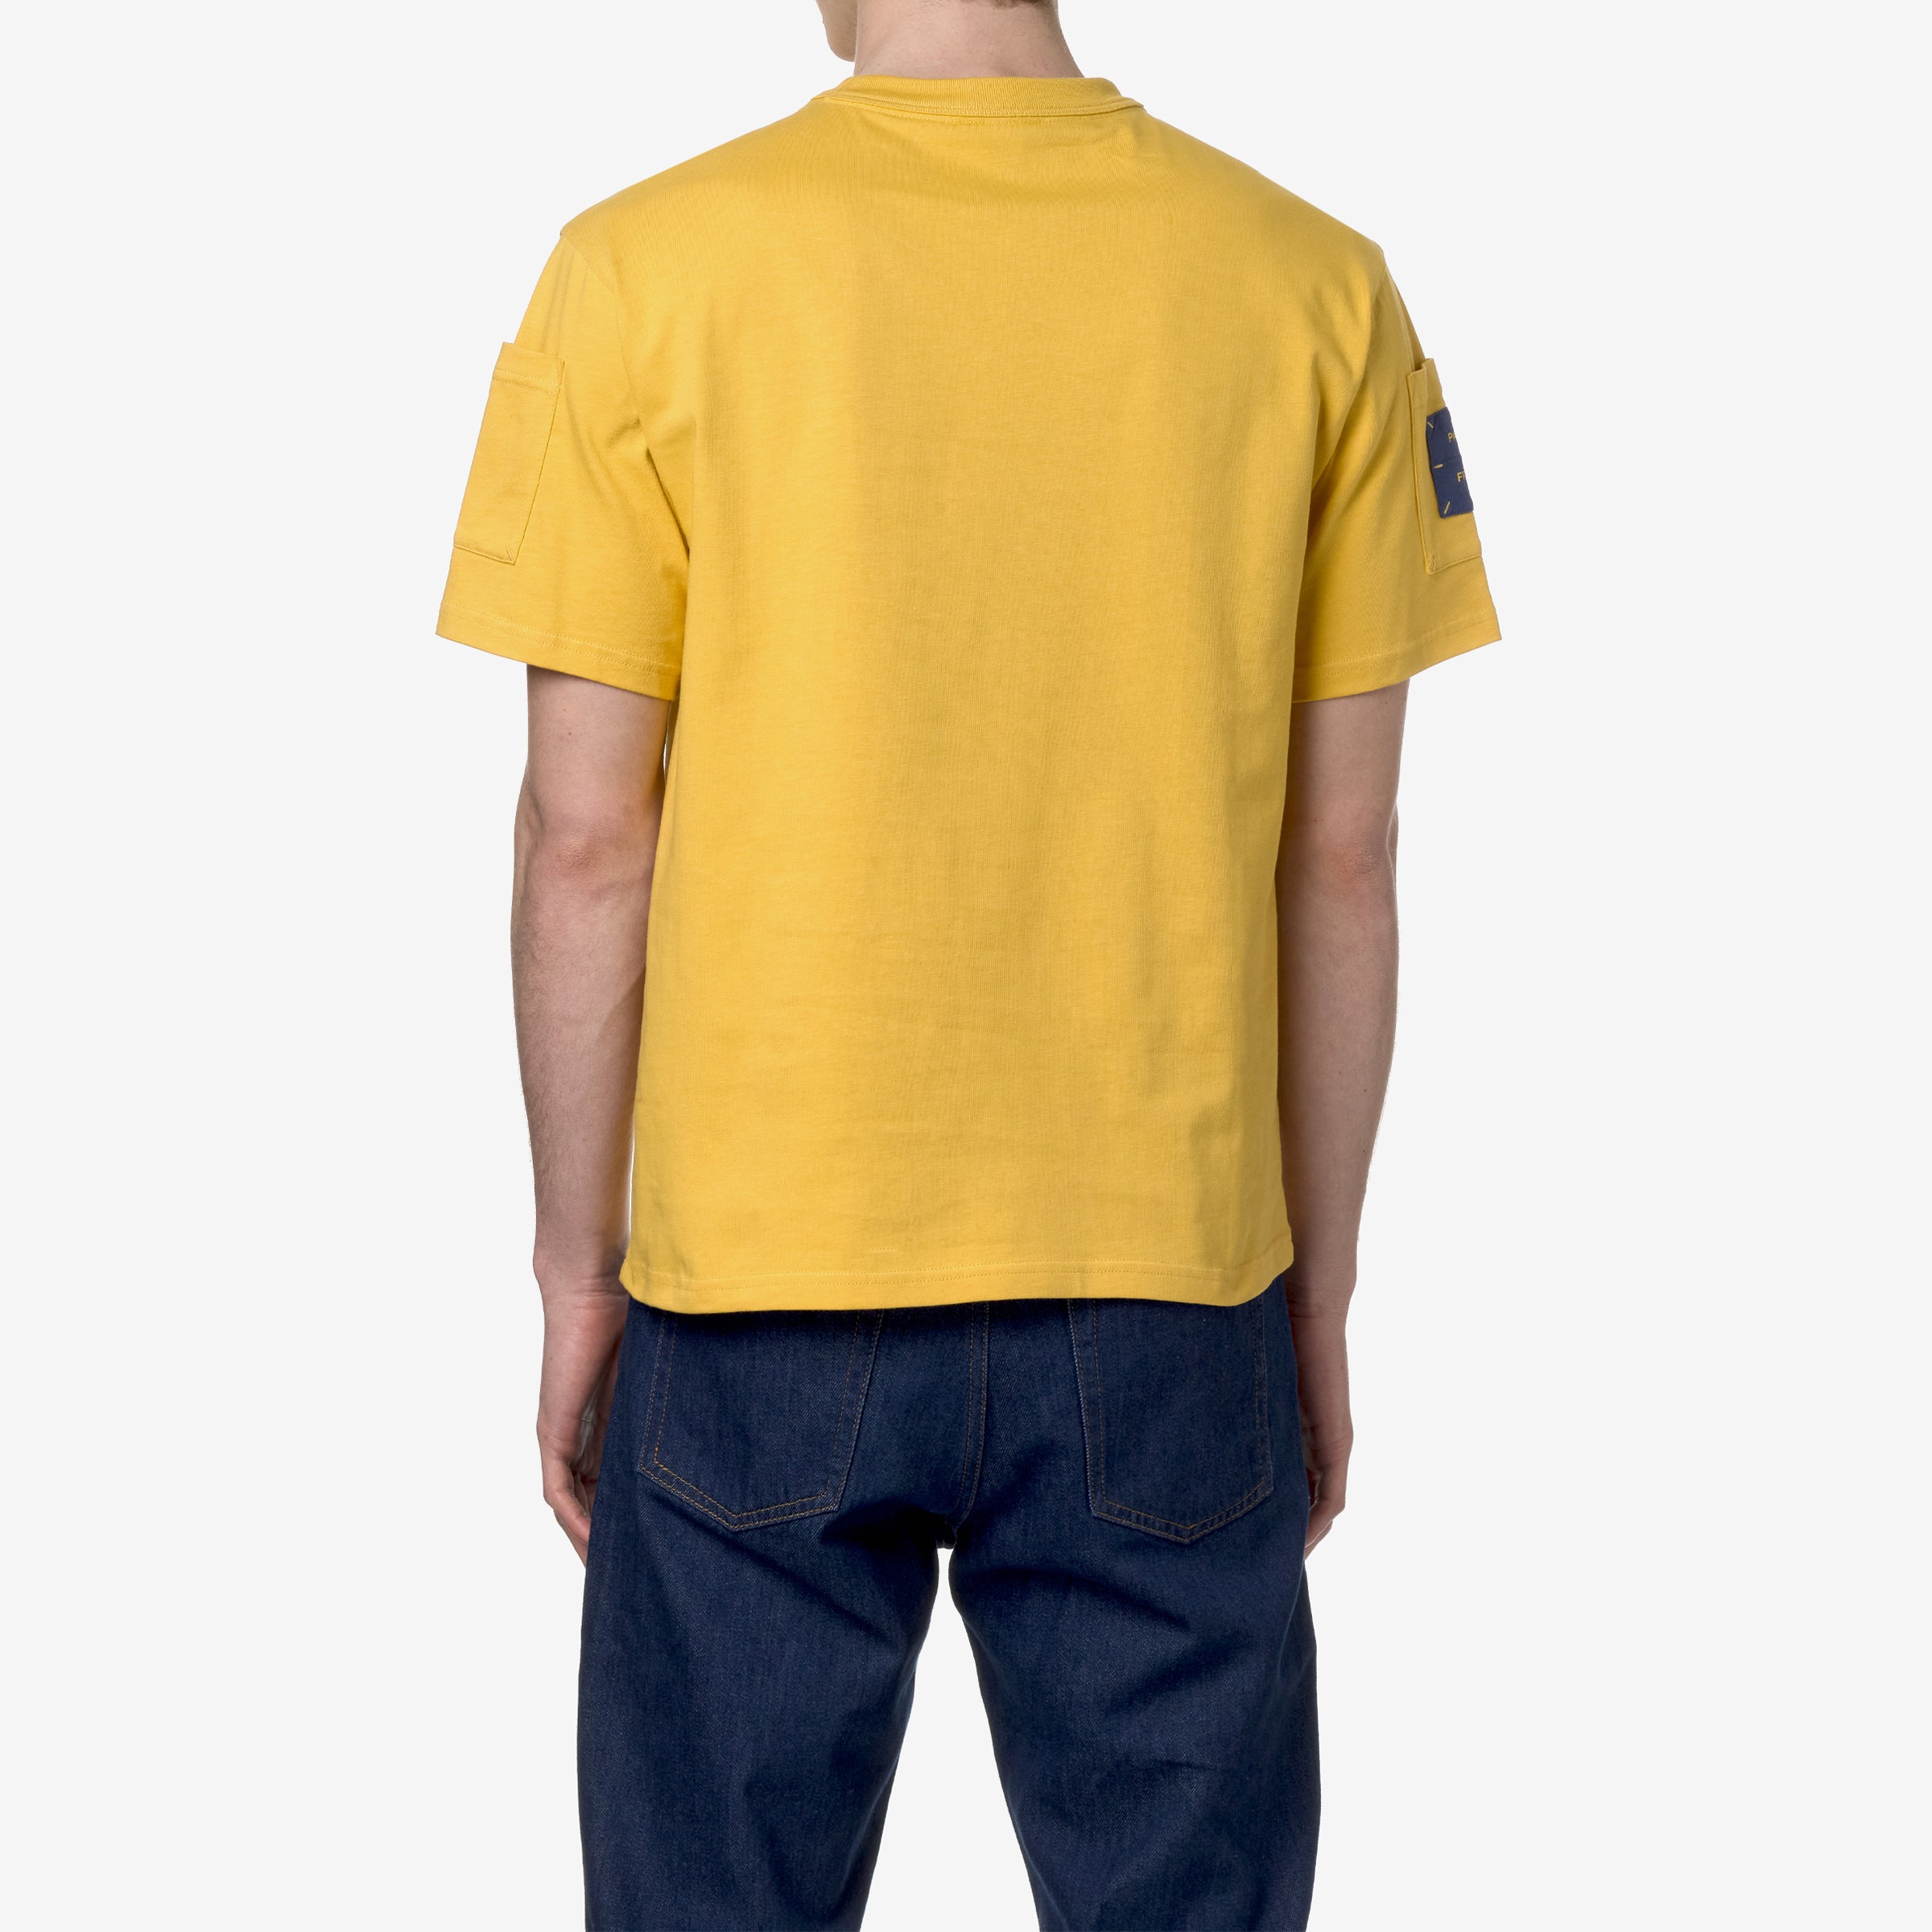 K-WAY T-Shirt Uomo Fantome Sleeve Pocket-Yellow Mimosa